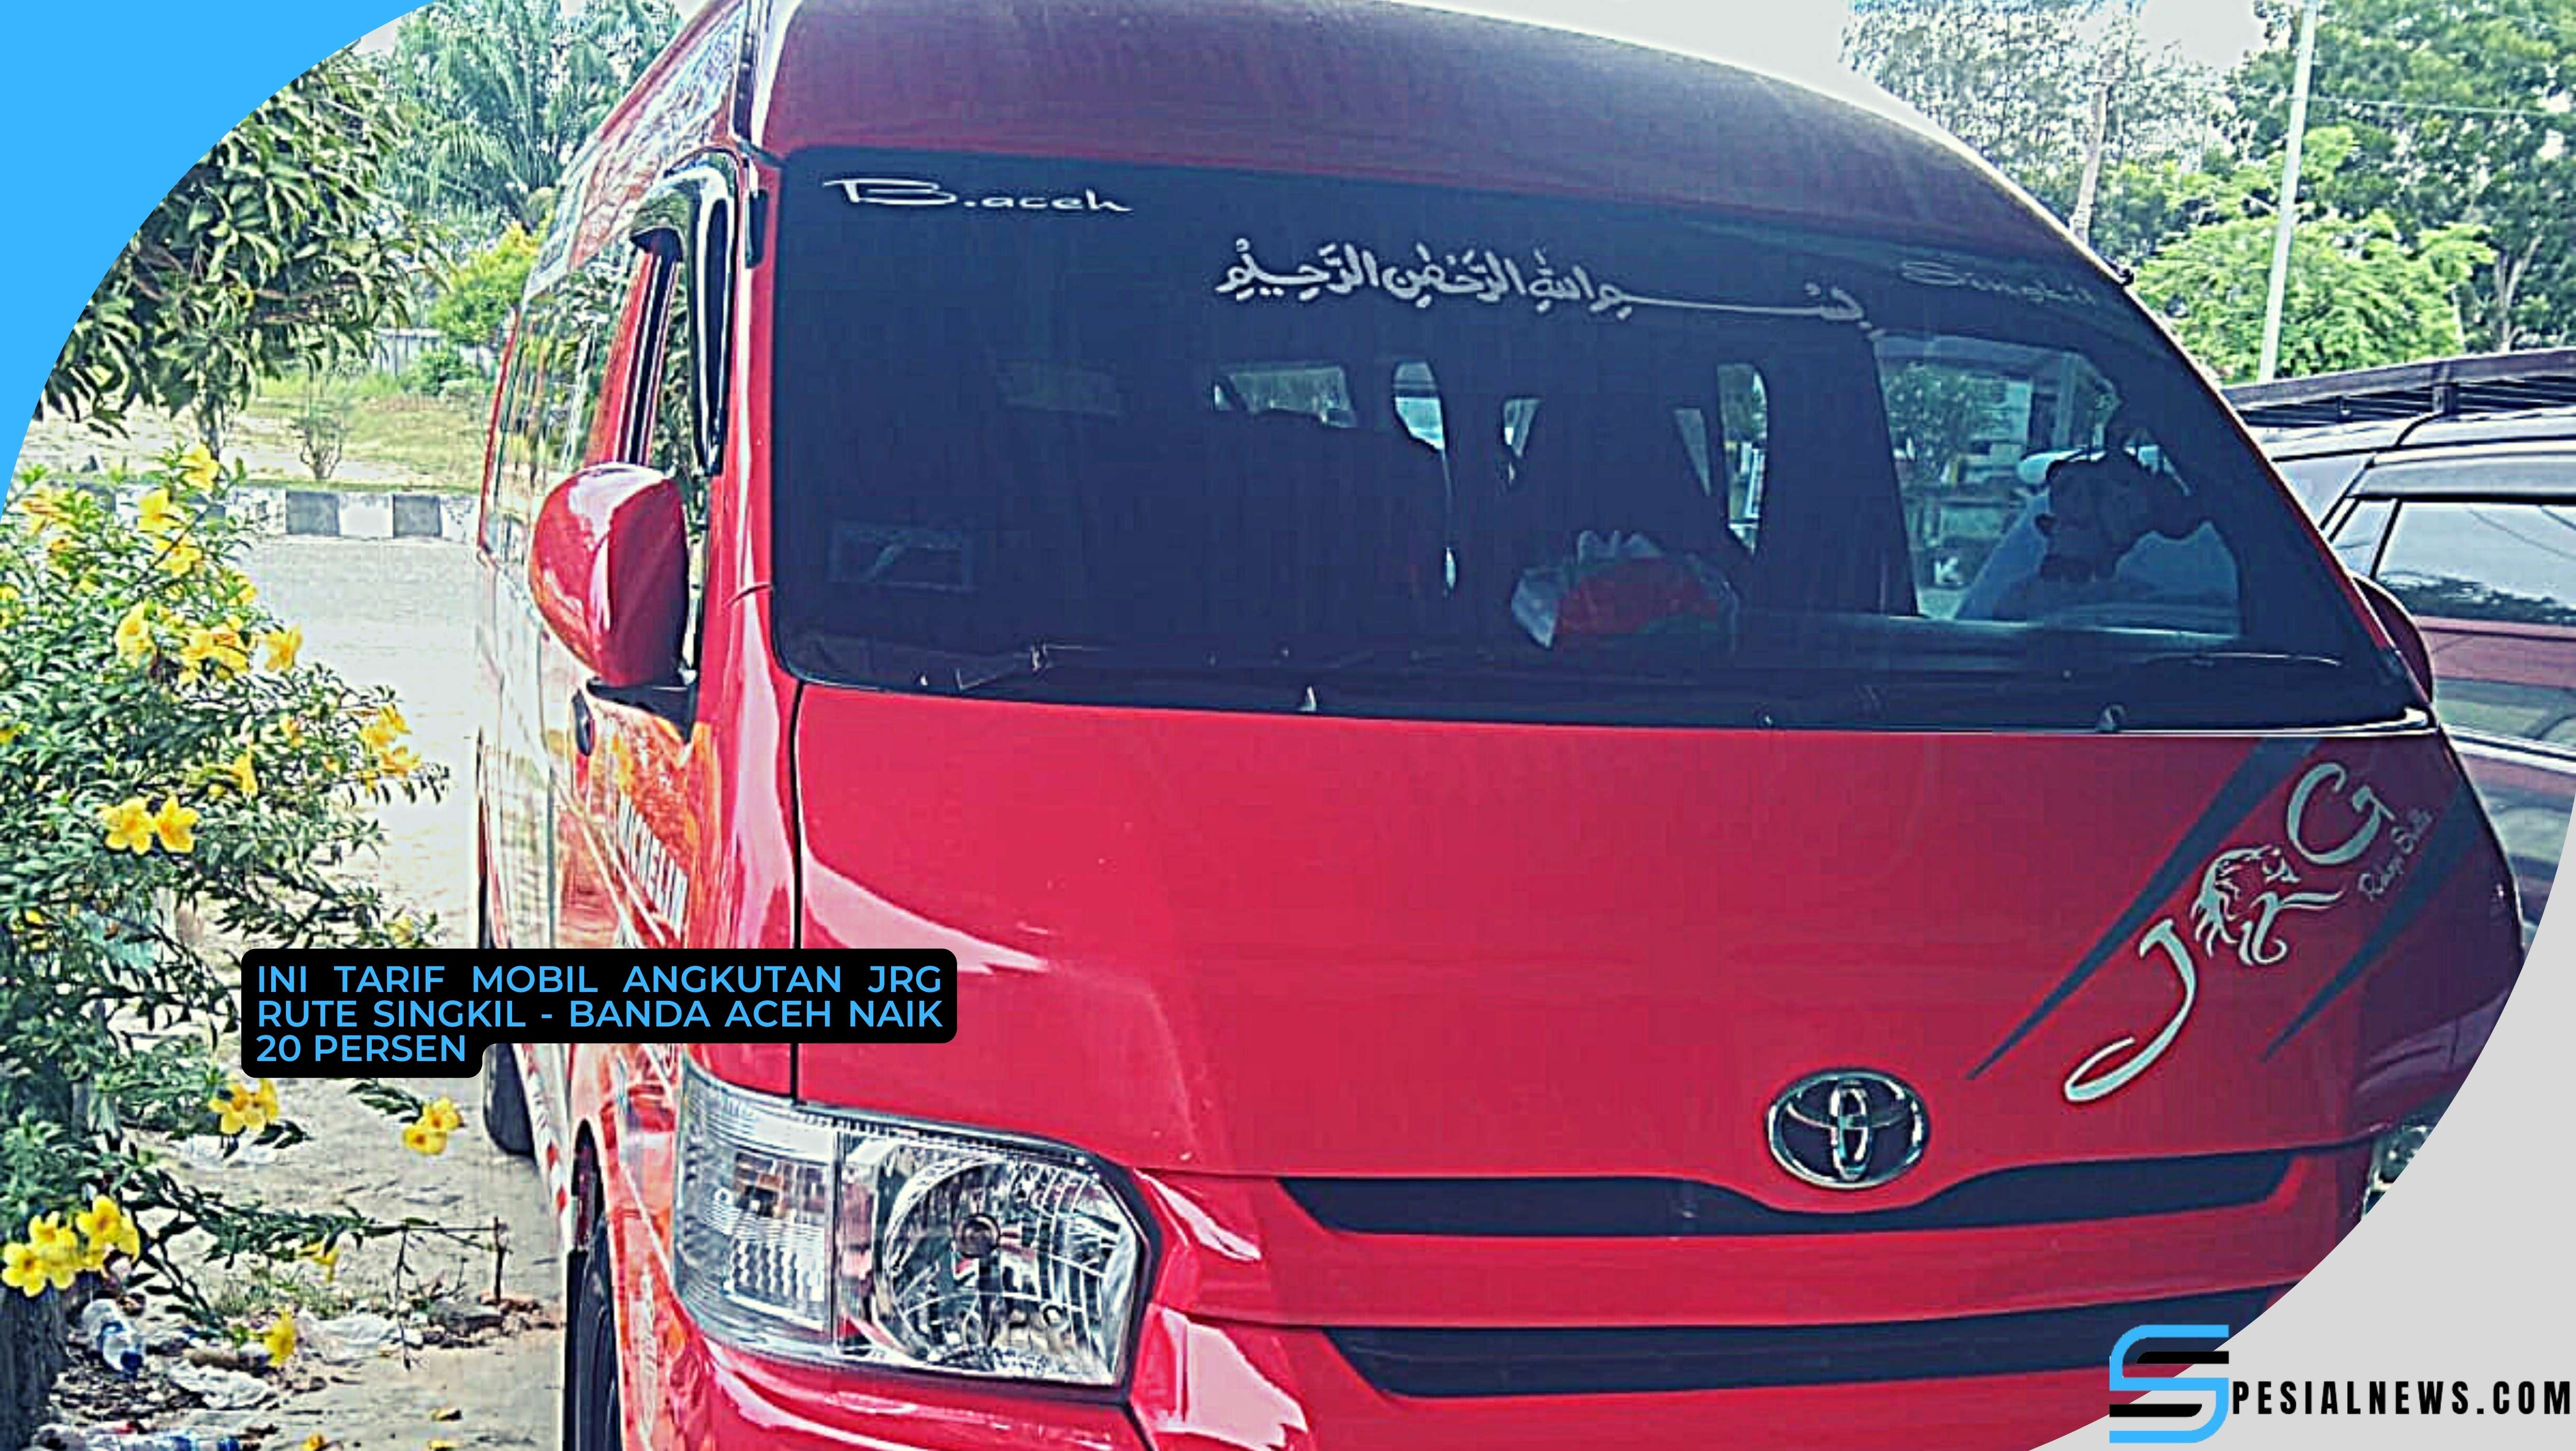 Ini Tarif Mobil Angkutan JRG Rute Singkil - Banda Aceh Naik 20 Persen